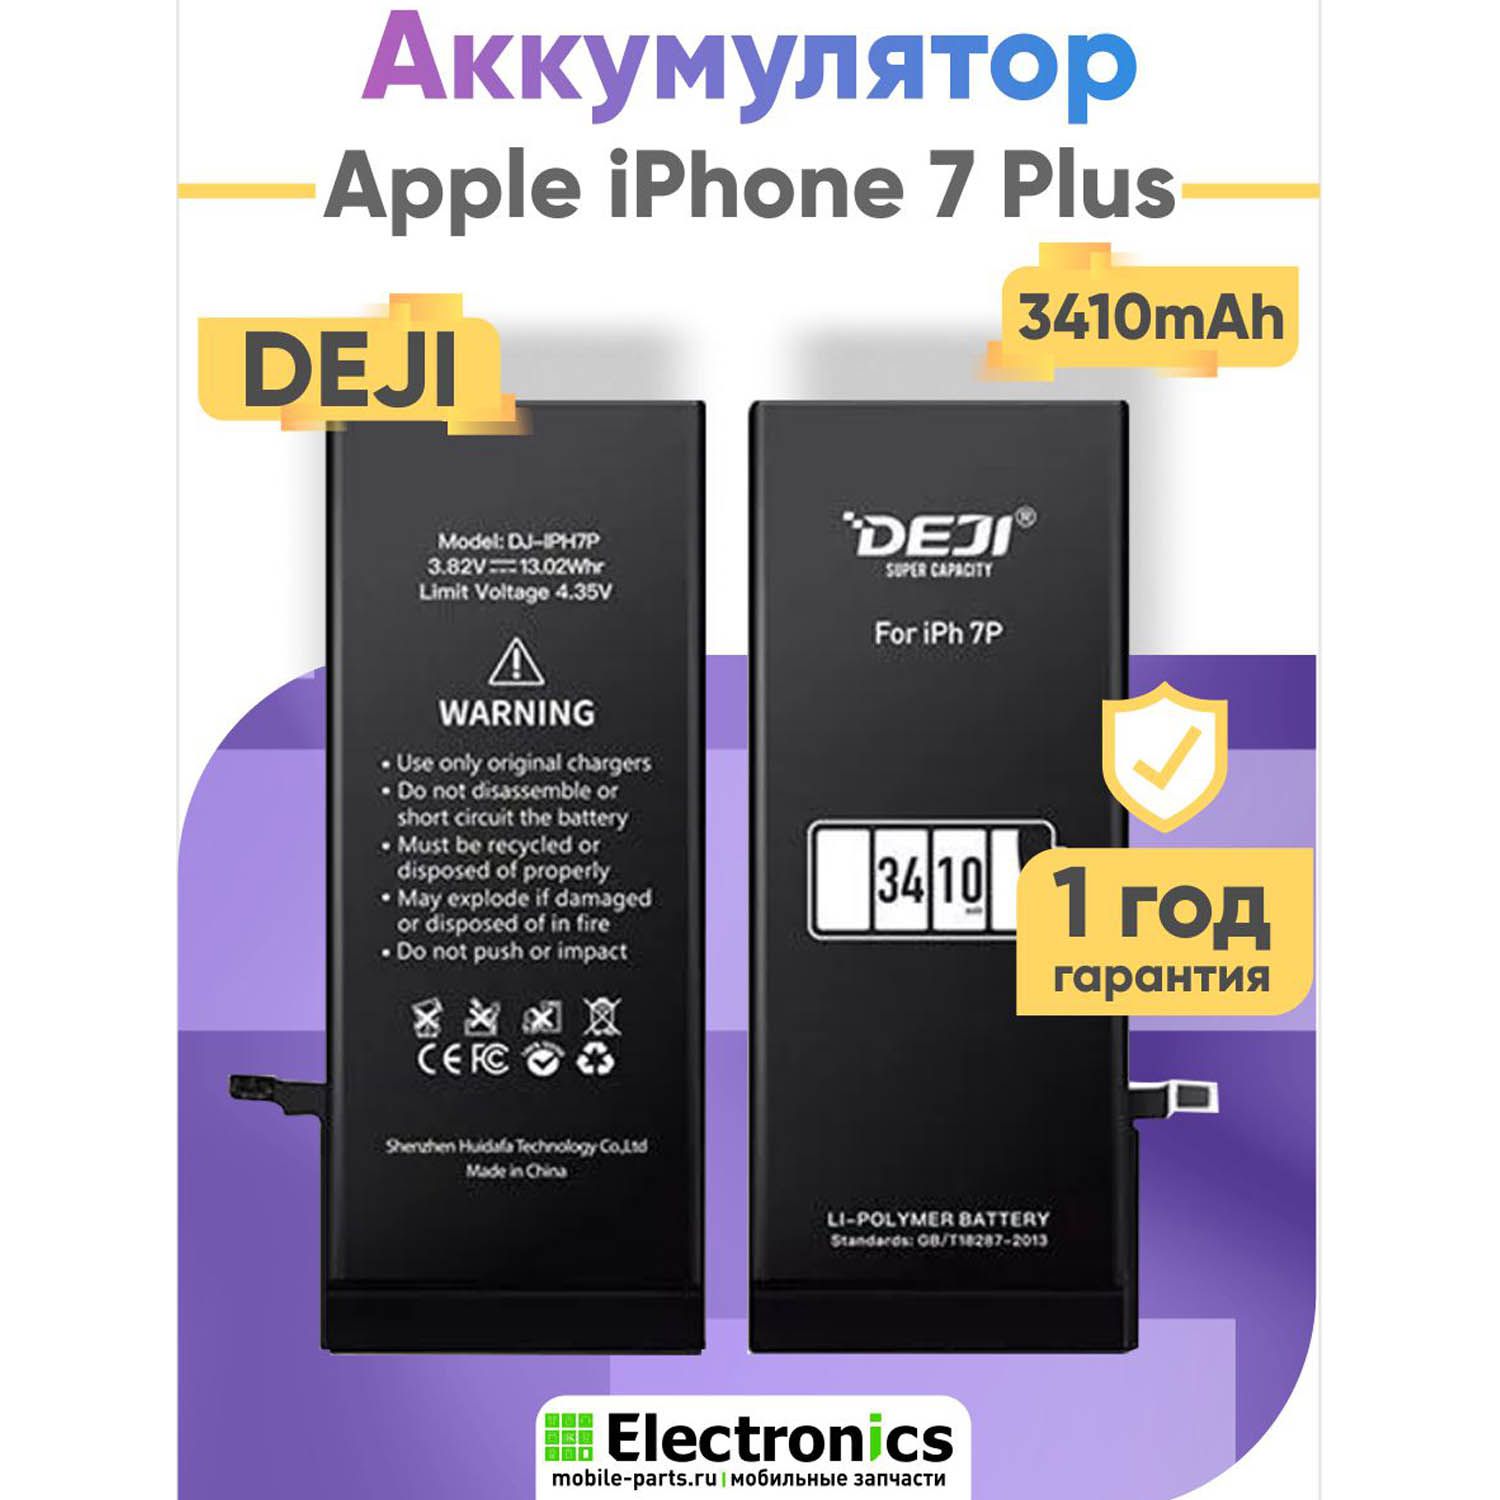 Аккумулятор DEJI Apple iPhone 7 Plus повышенной ёмкости 3410mAh